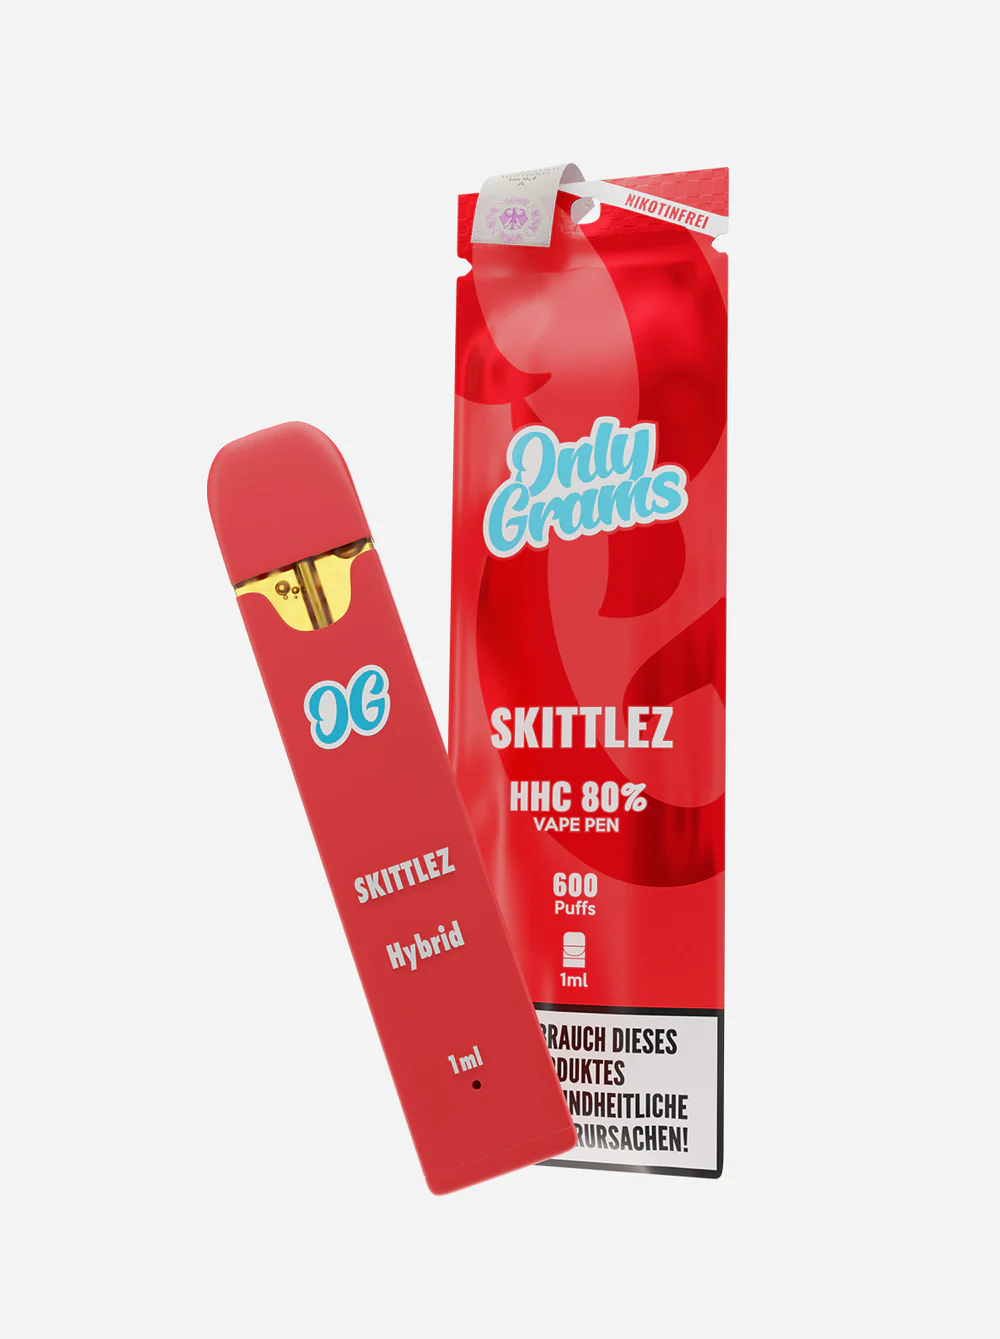 Only Grams - HHC Einweg E-Zigarette (600 Züge) - Skittlez - 1ml